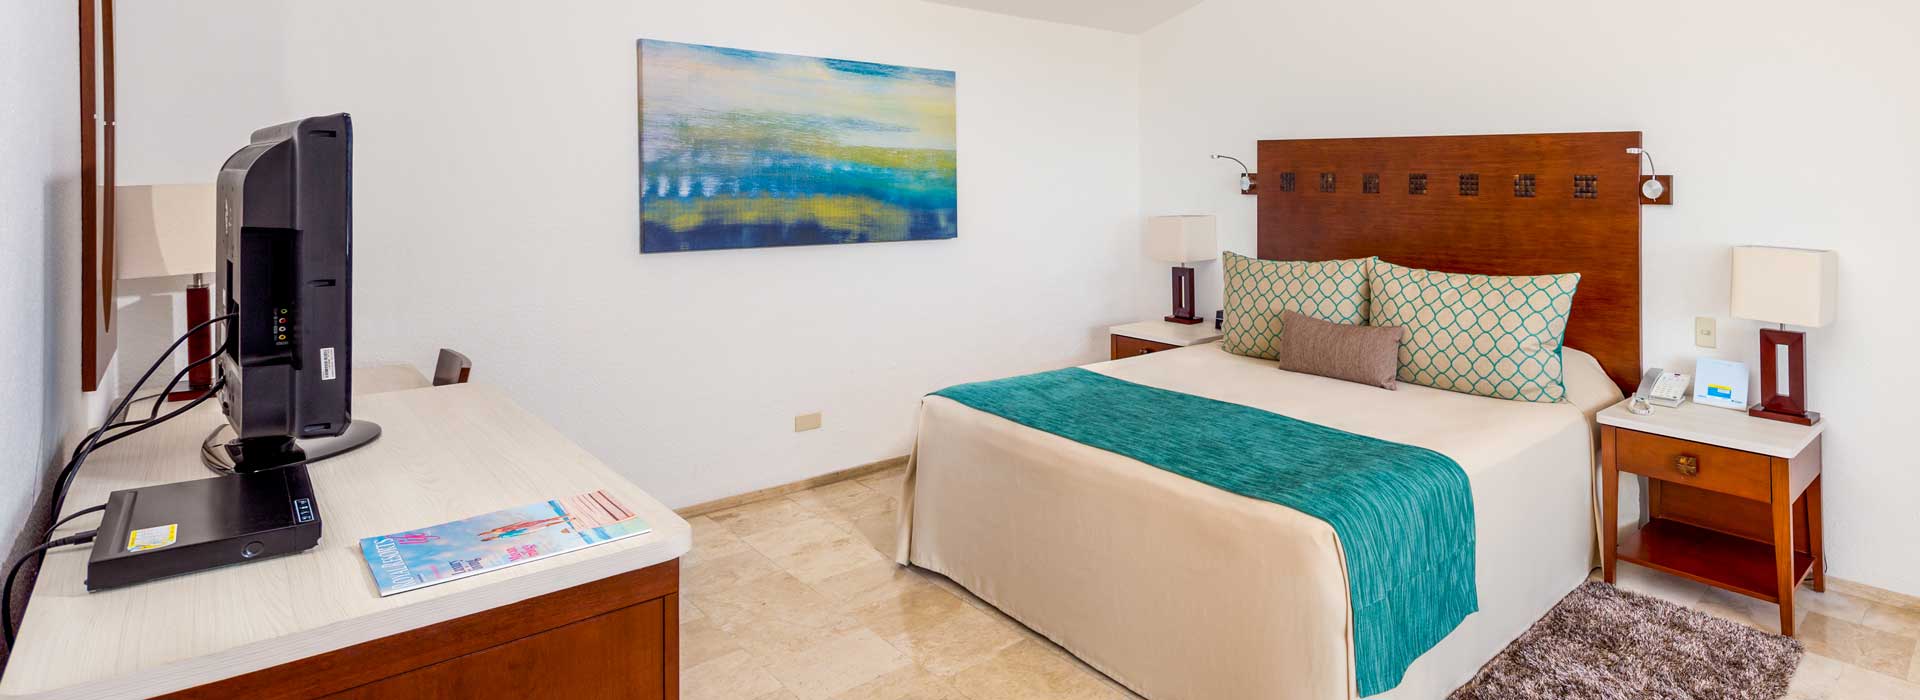 Cancun resort family room